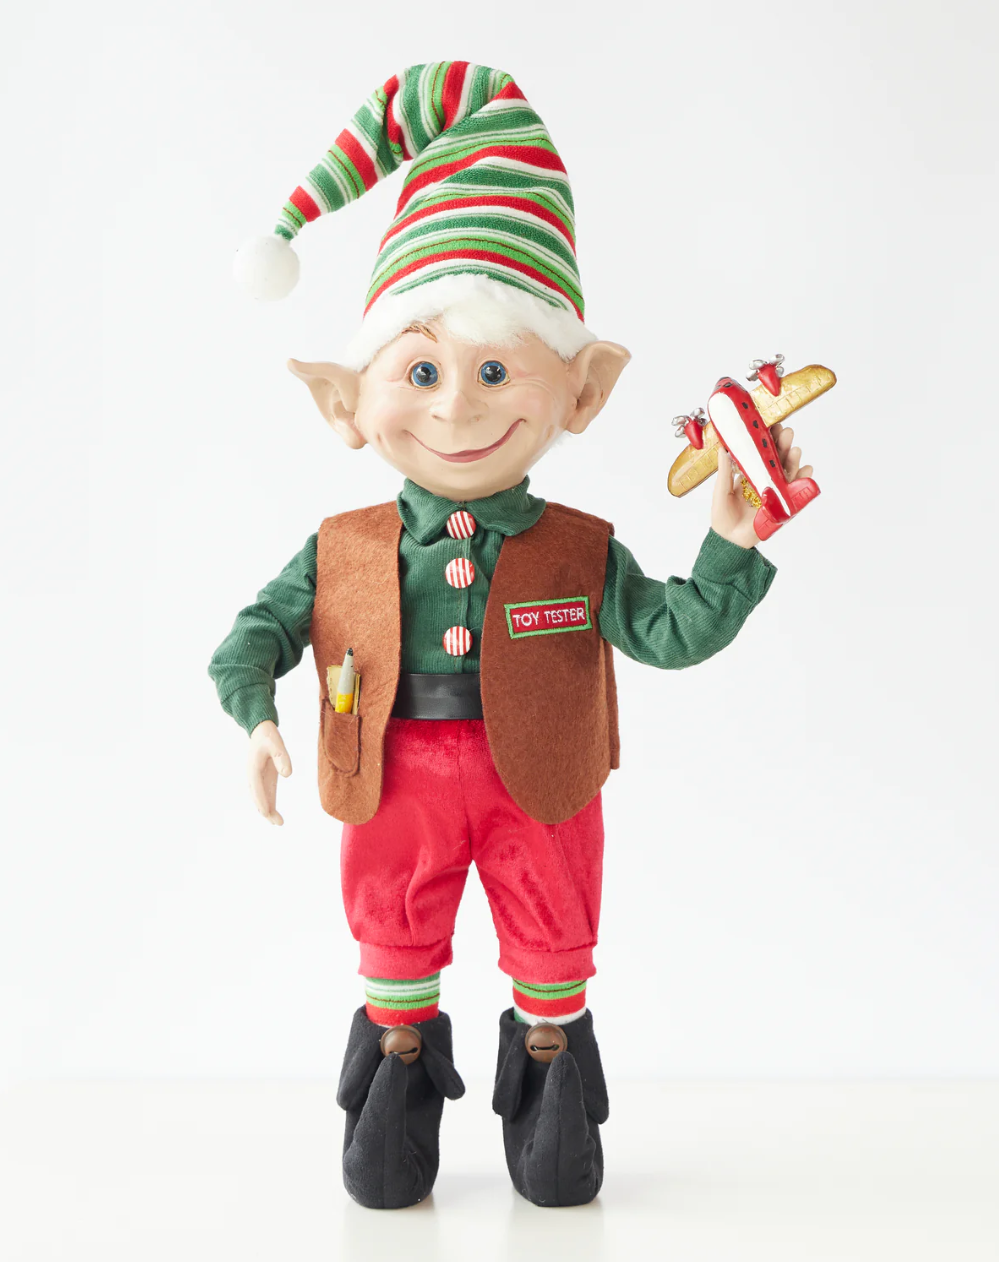 Toy Tester "Chisel" Elf